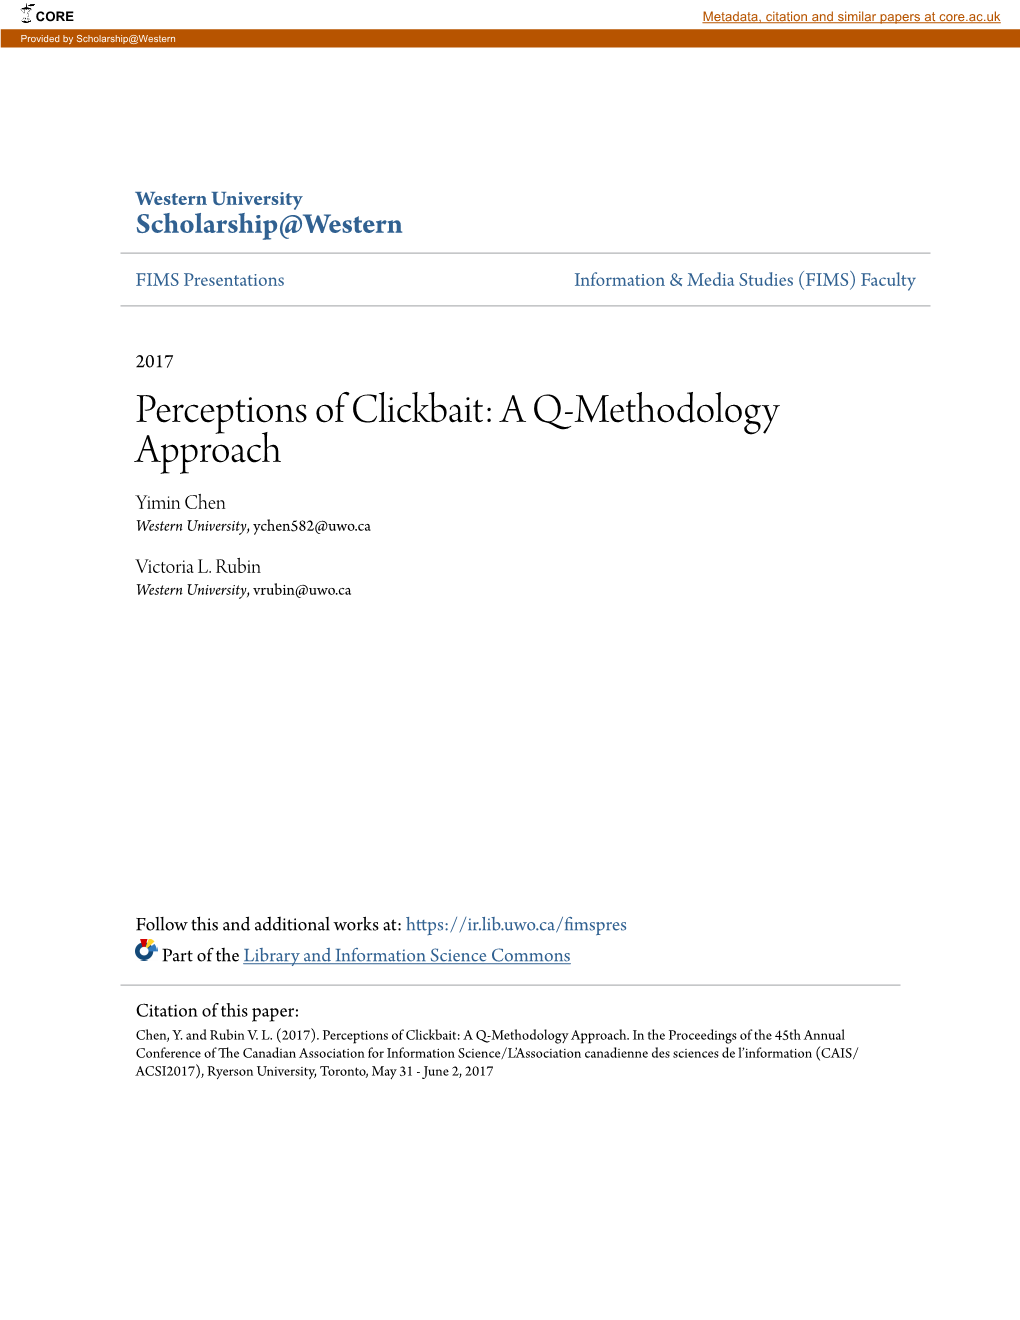 Perceptions of Clickbait: a Q-Methodology Approach Yimin Chen Western University, Ychen582@Uwo.Ca